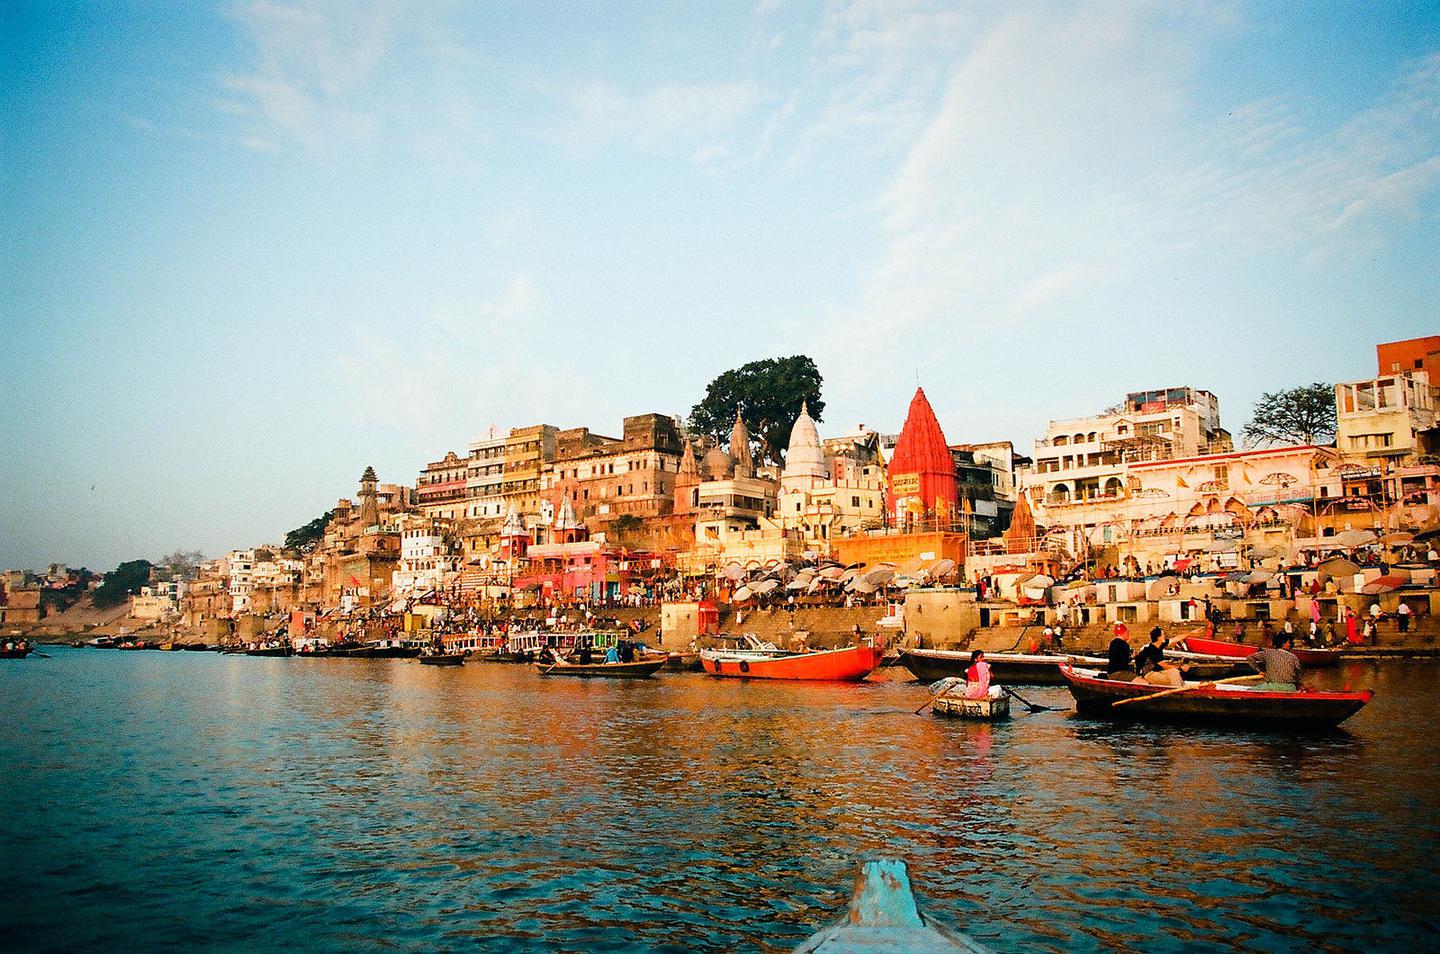 The Ganges River in Varanasi, India